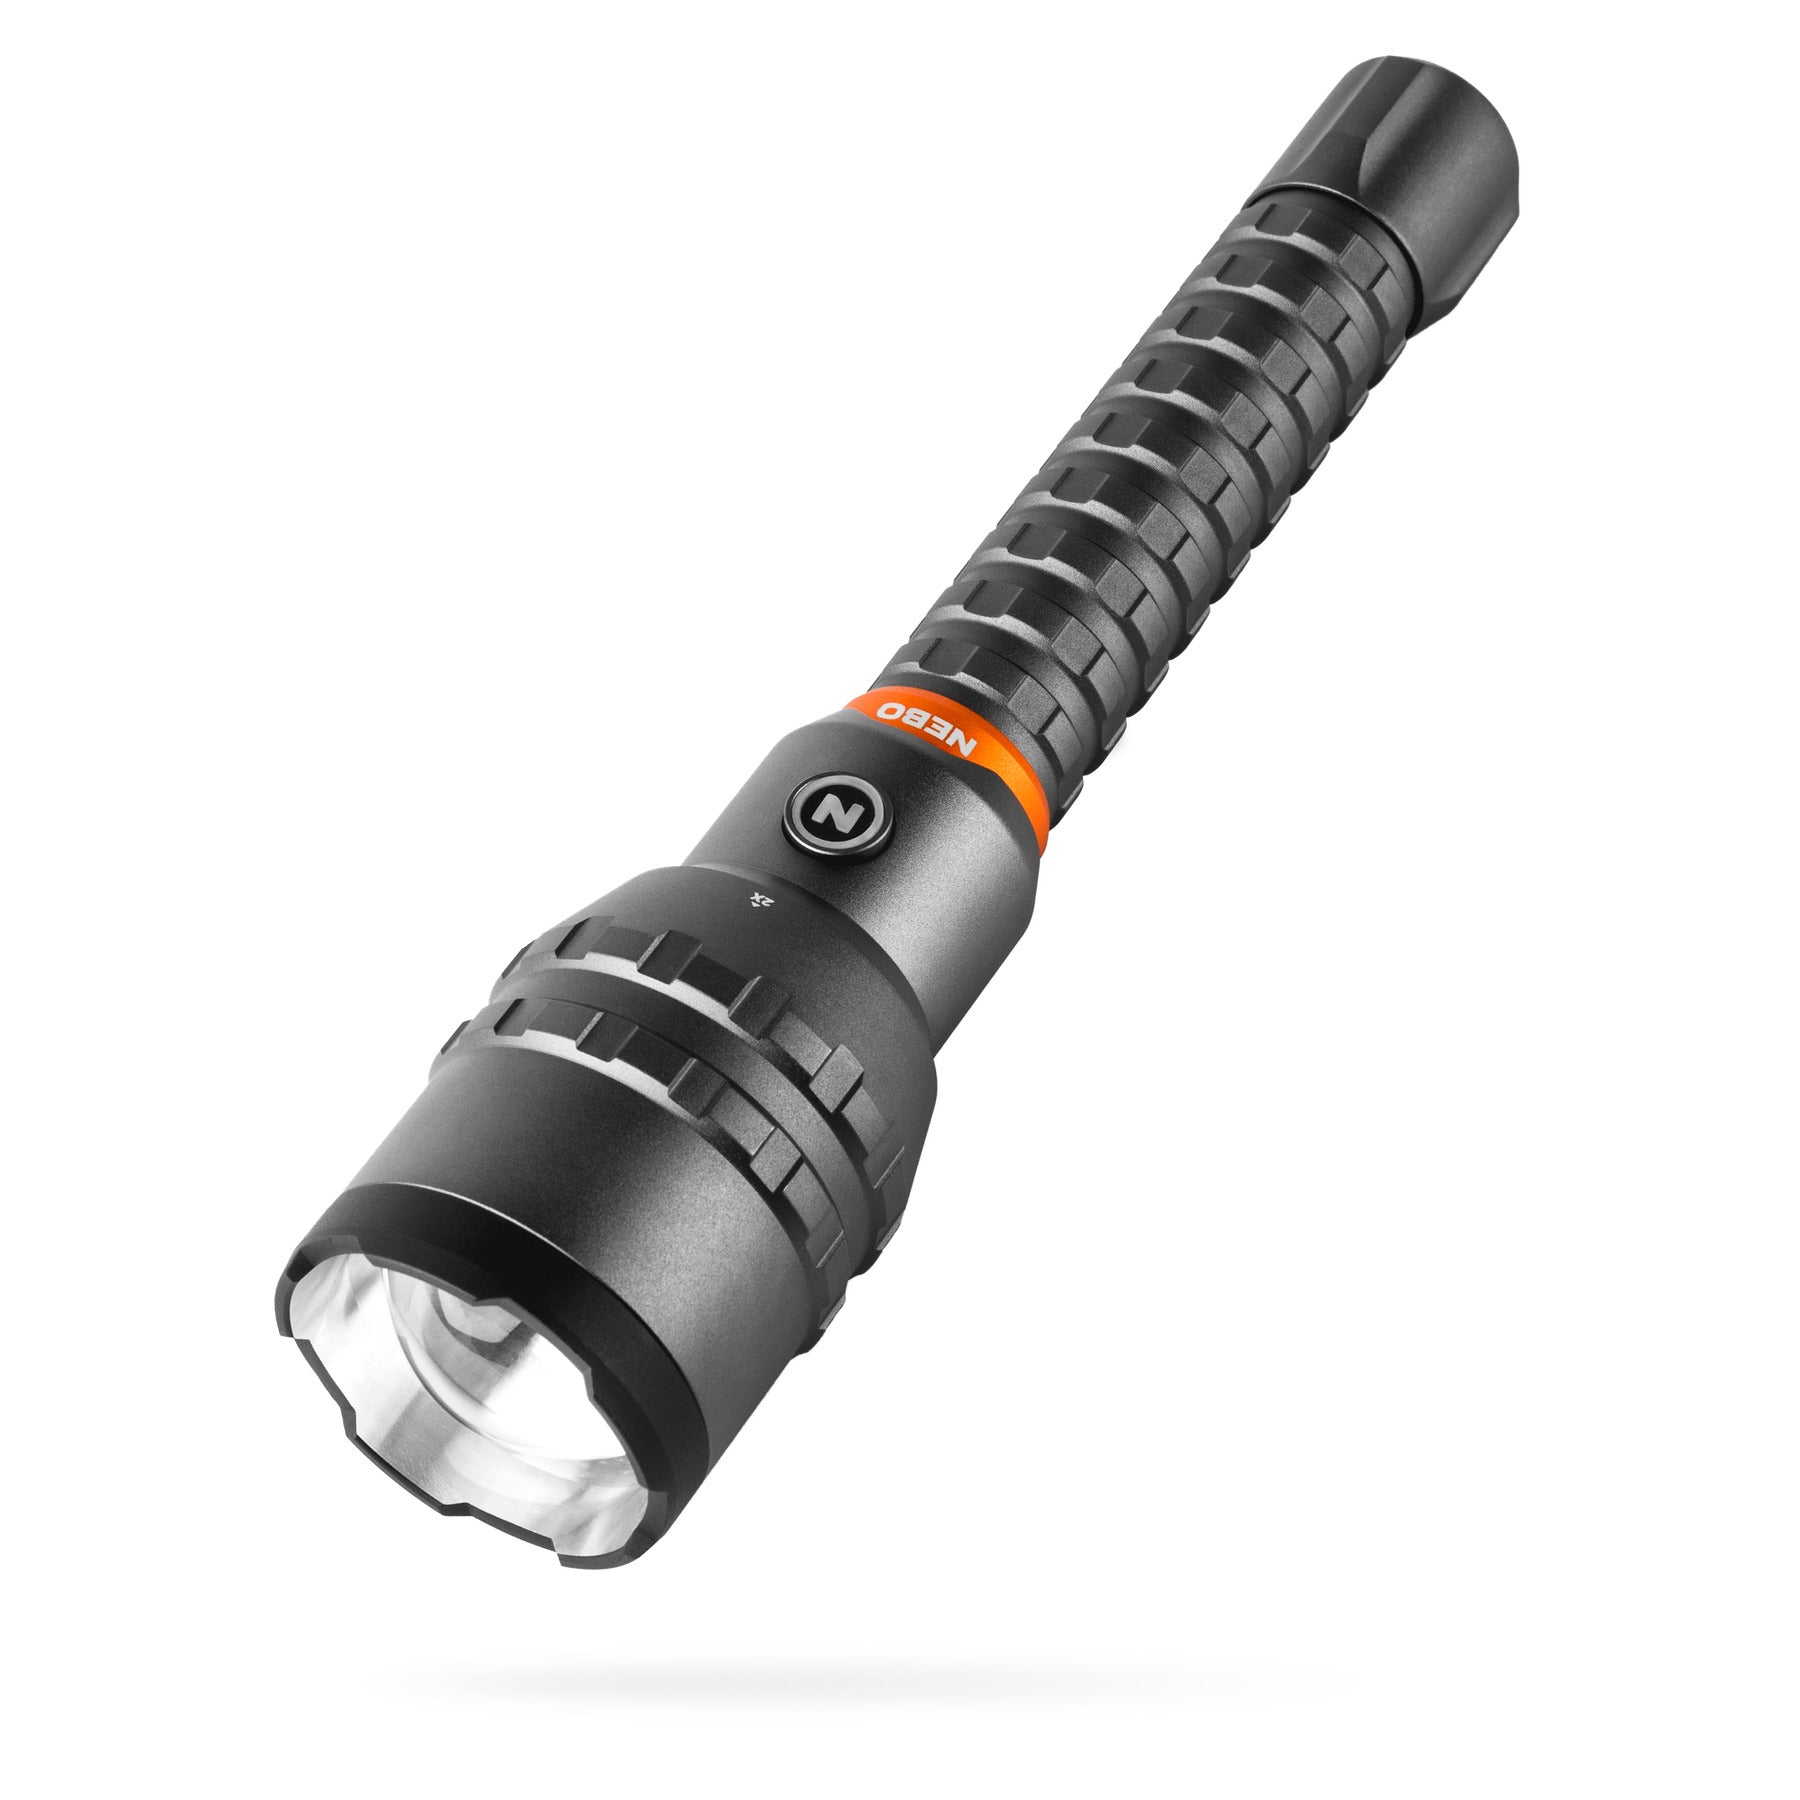 NEBO - 12K Lumen Flashlight with Power Bank